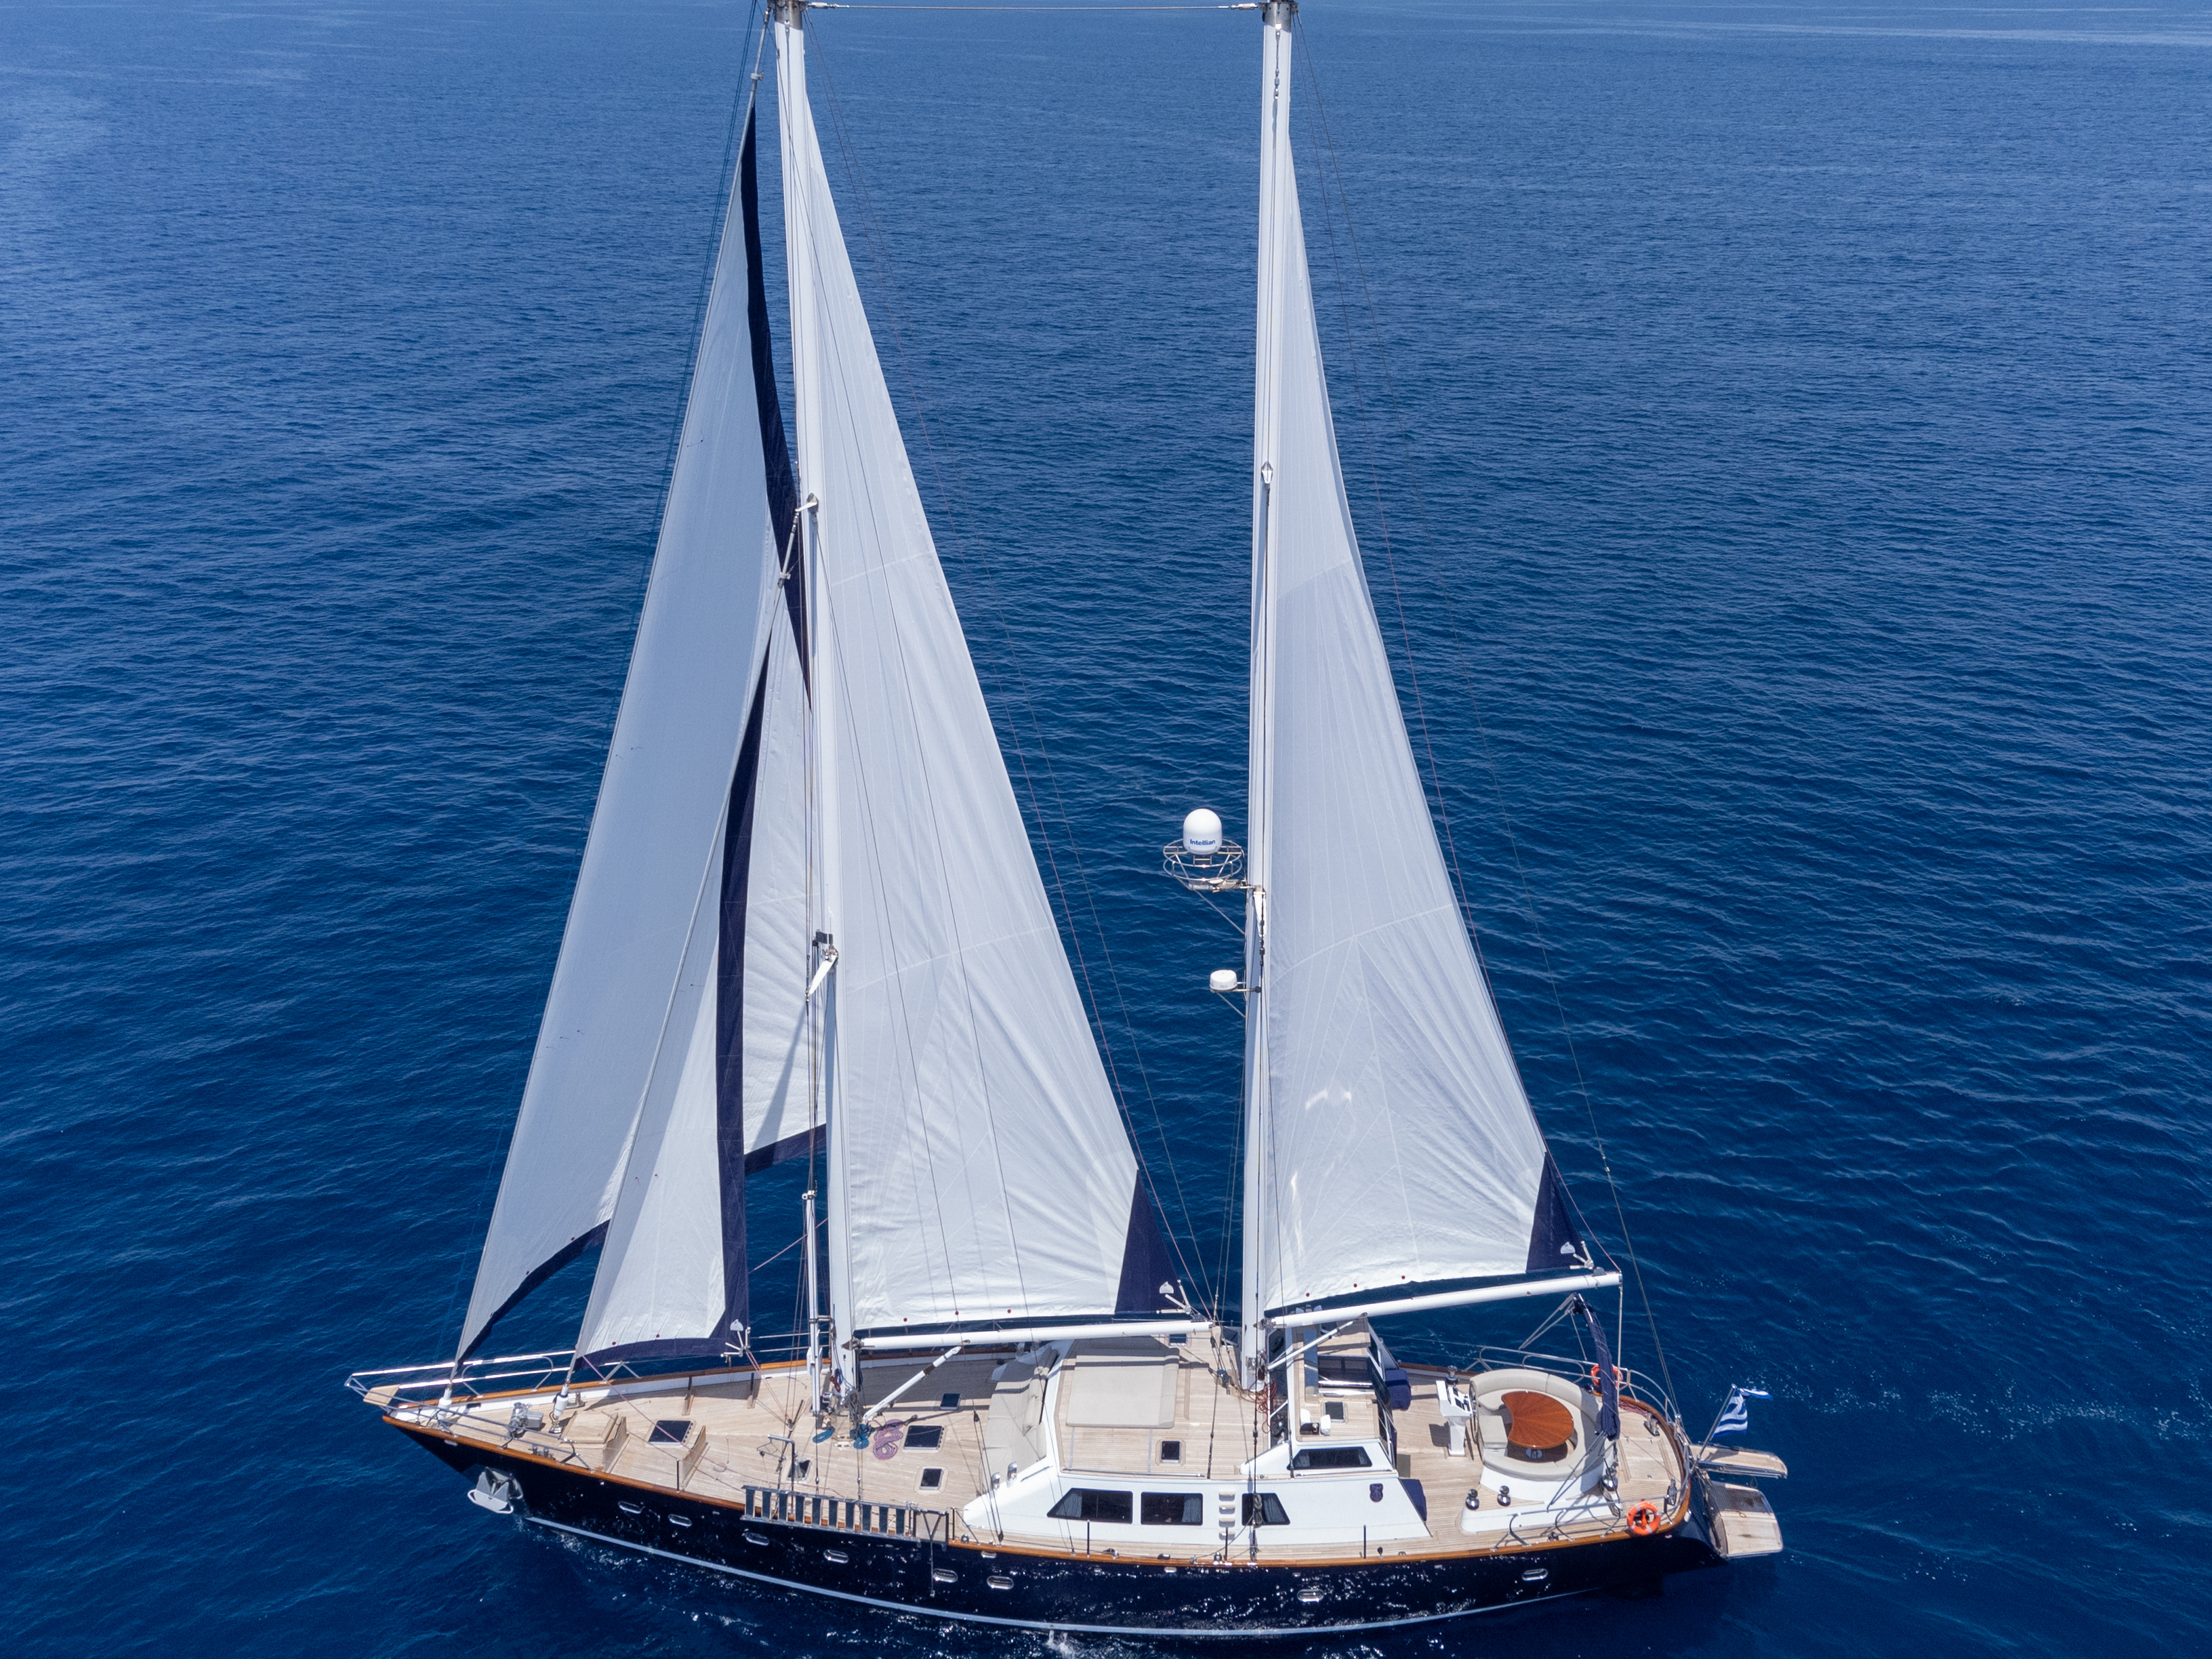 CCYD 85 - Location de Superyacht dans le Monde Entier & Boat hire in Greece Athens and Saronic Gulf Athens Piraeus Marina Zea 1